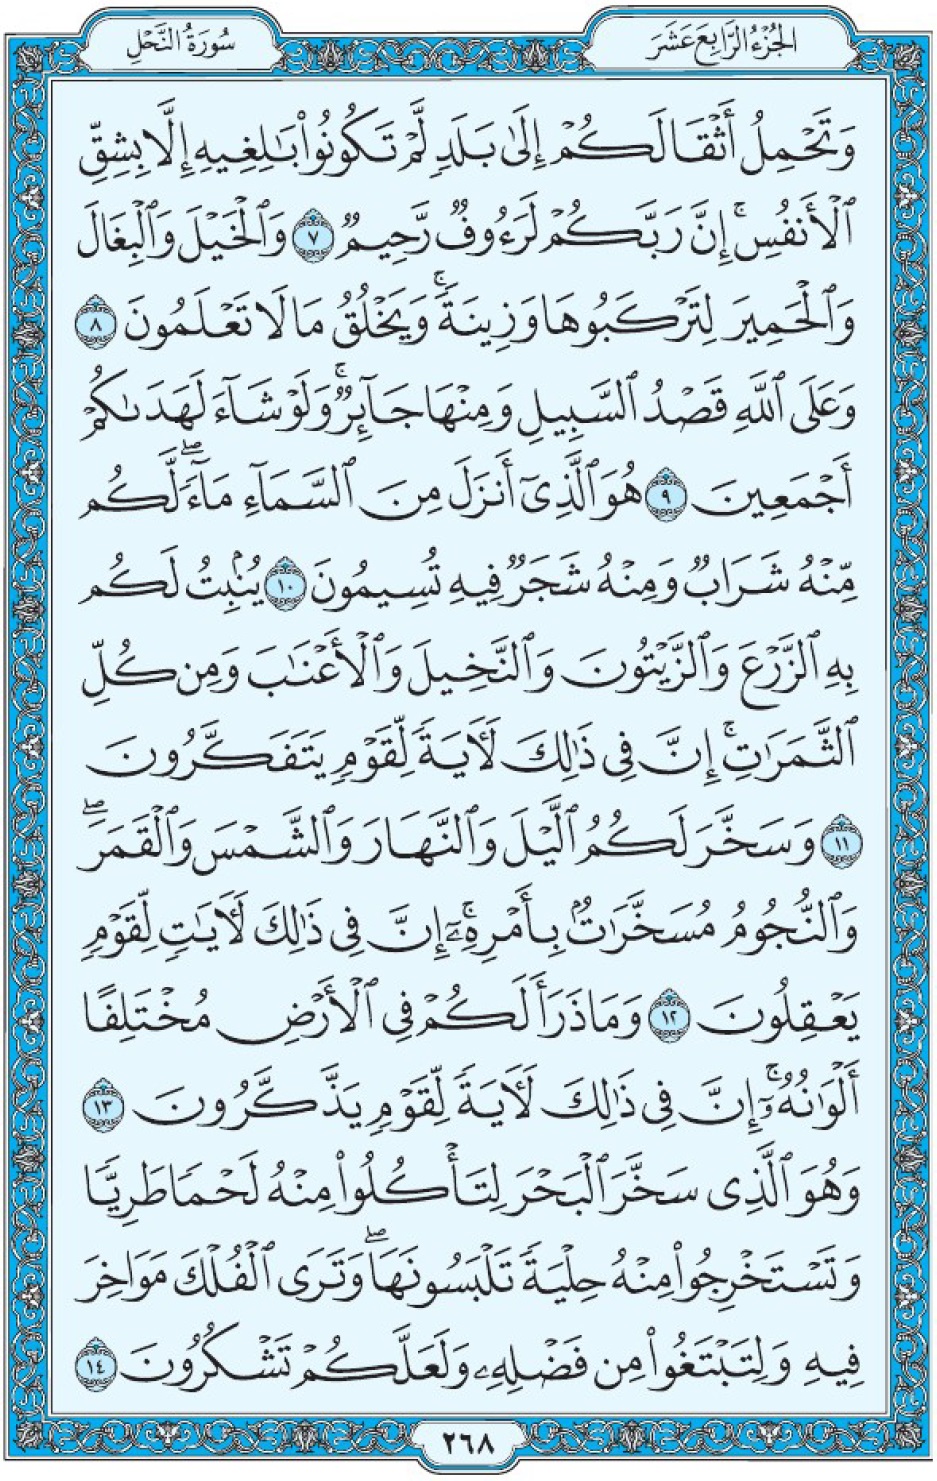 Коран Мединский мусхаф страница 268, Ан-Нахль, аят 7-14